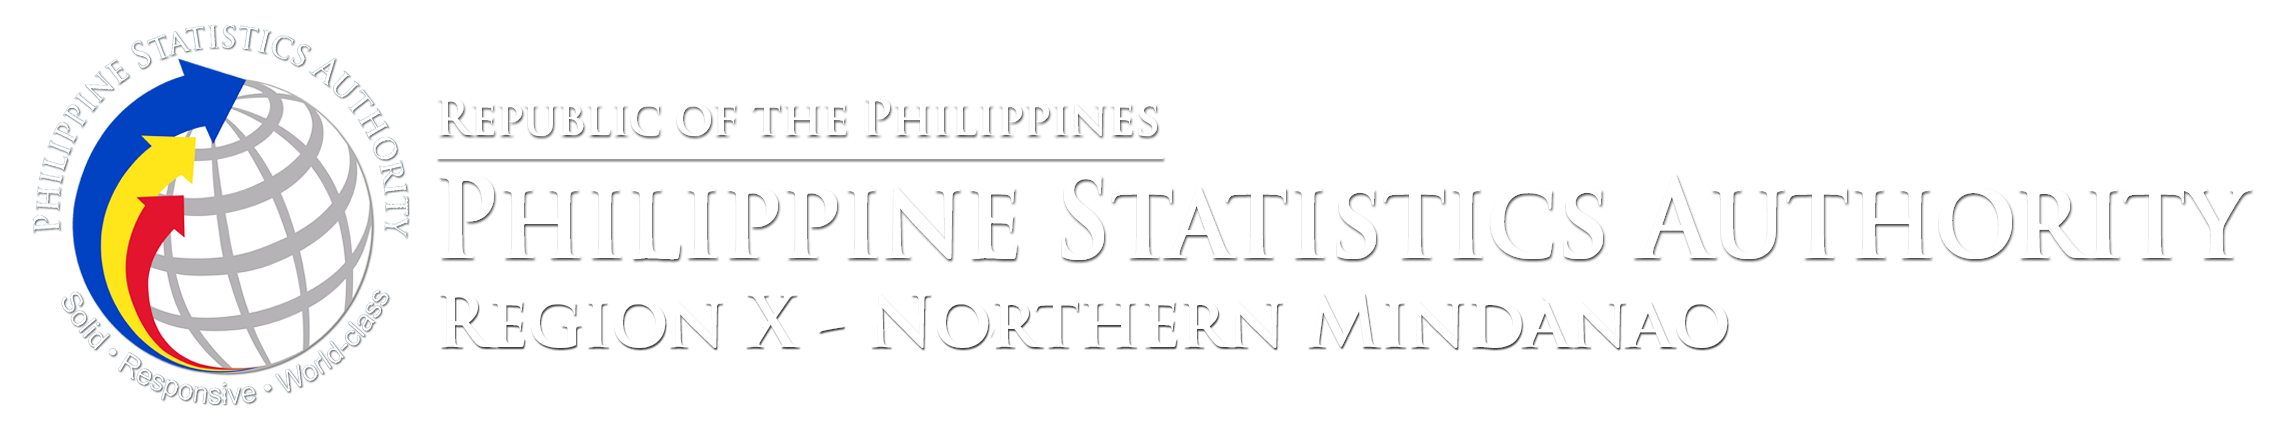 Philippine Statistics Authority Region X (Northern Mindanao)